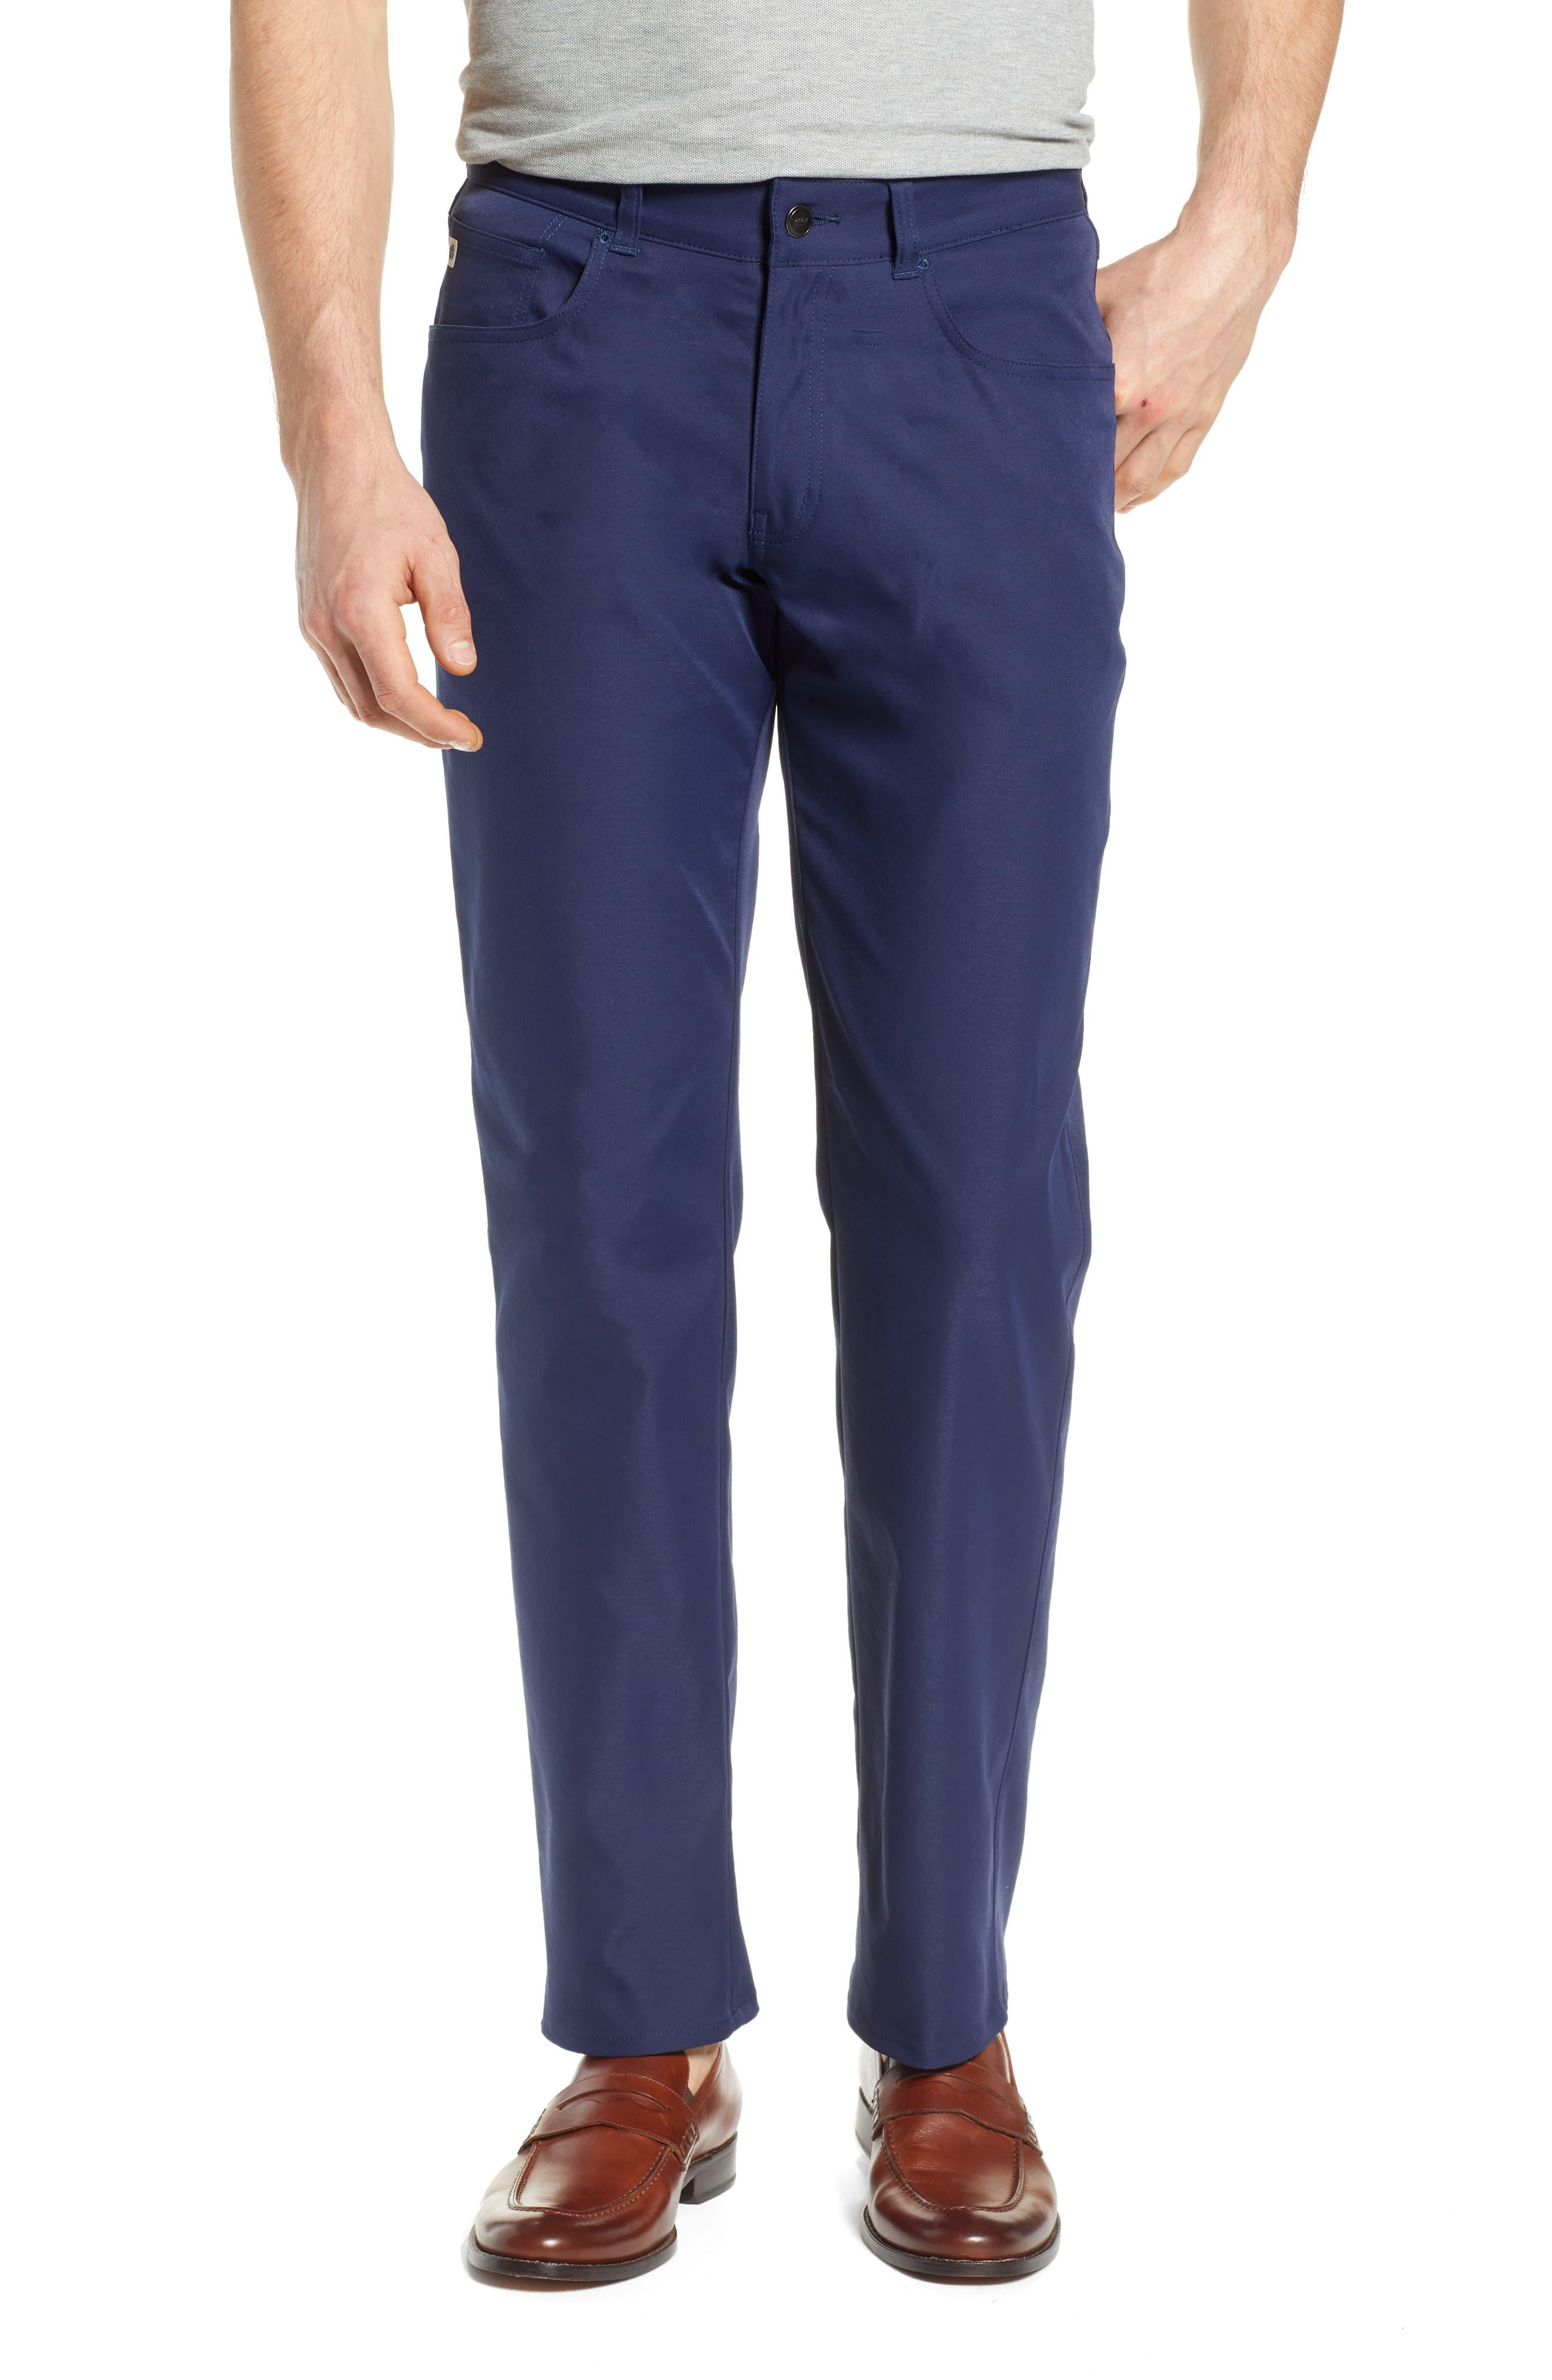 Peter Millar Five-pocket Performance Pants in Navy (Blue) for Men - Lyst